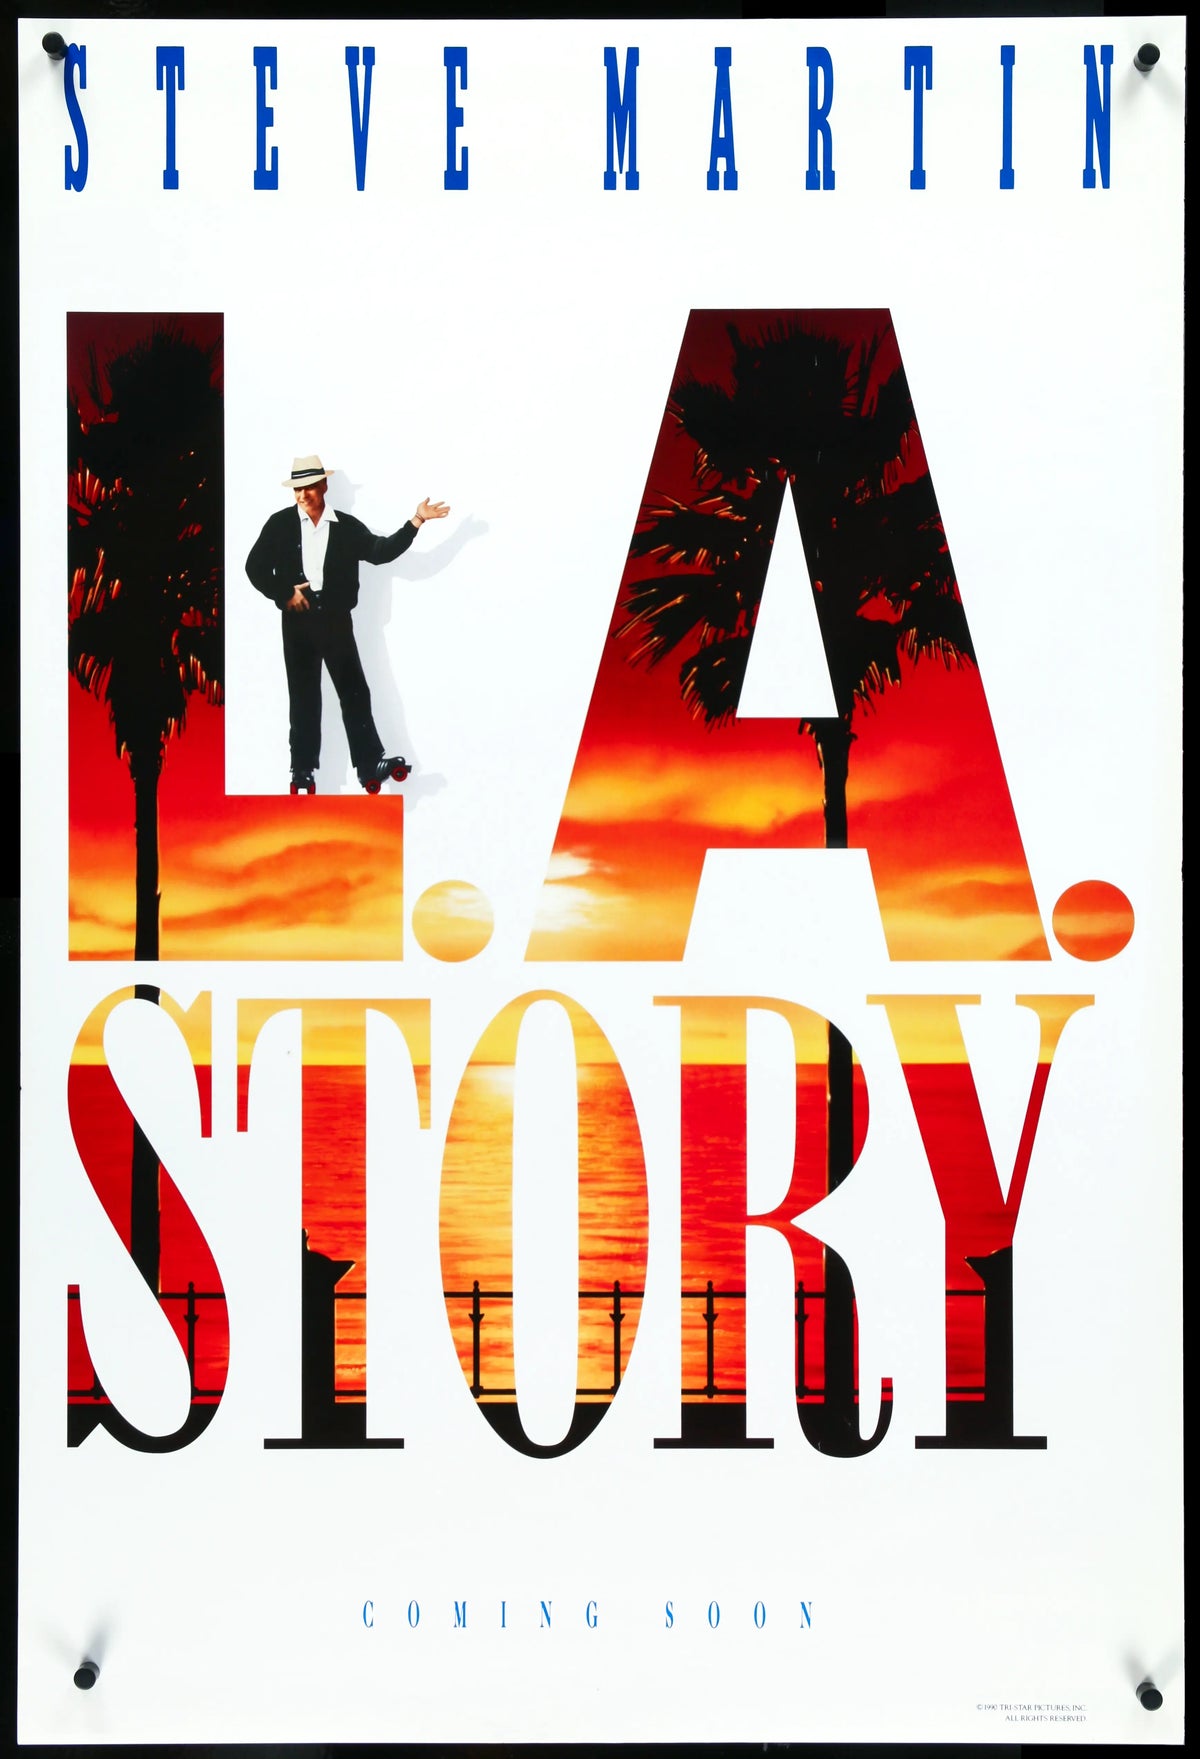 L.A. Story (1991) original movie poster for sale at Original Film Art